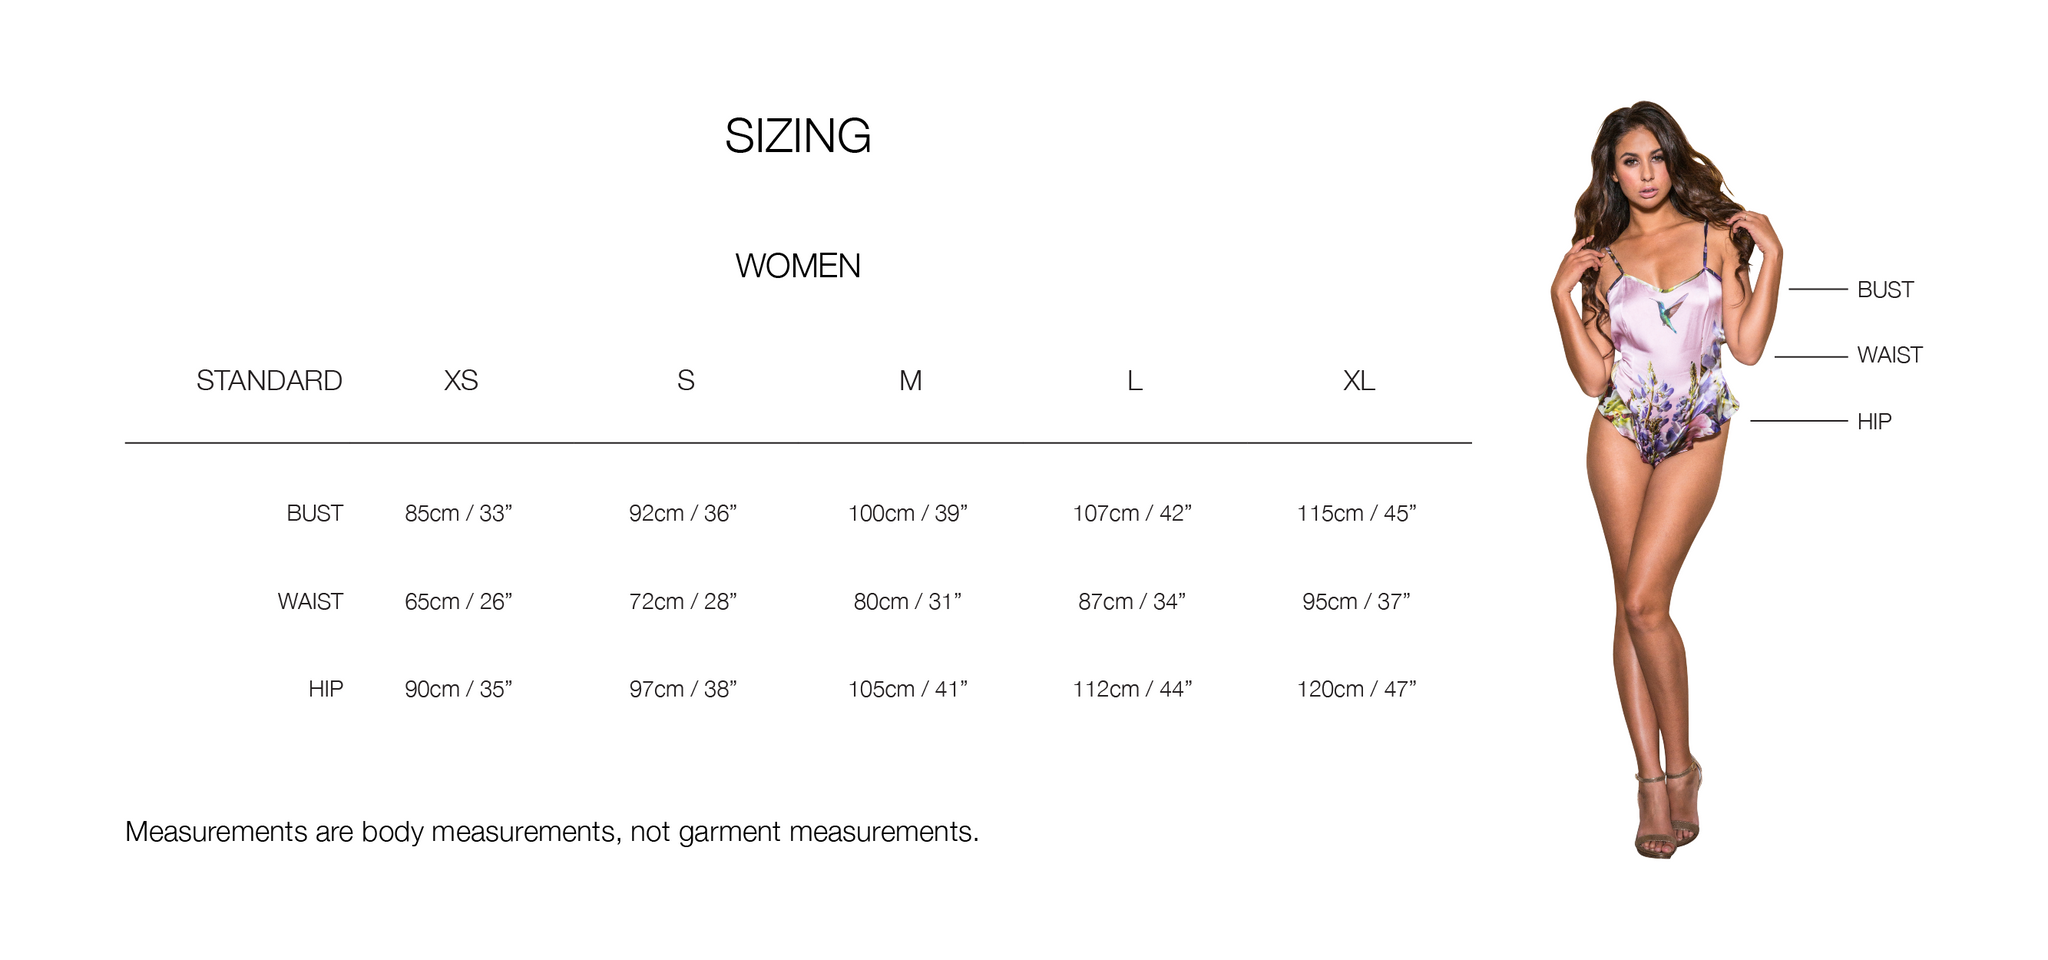 Women size chart - Pellein guide to body measurements